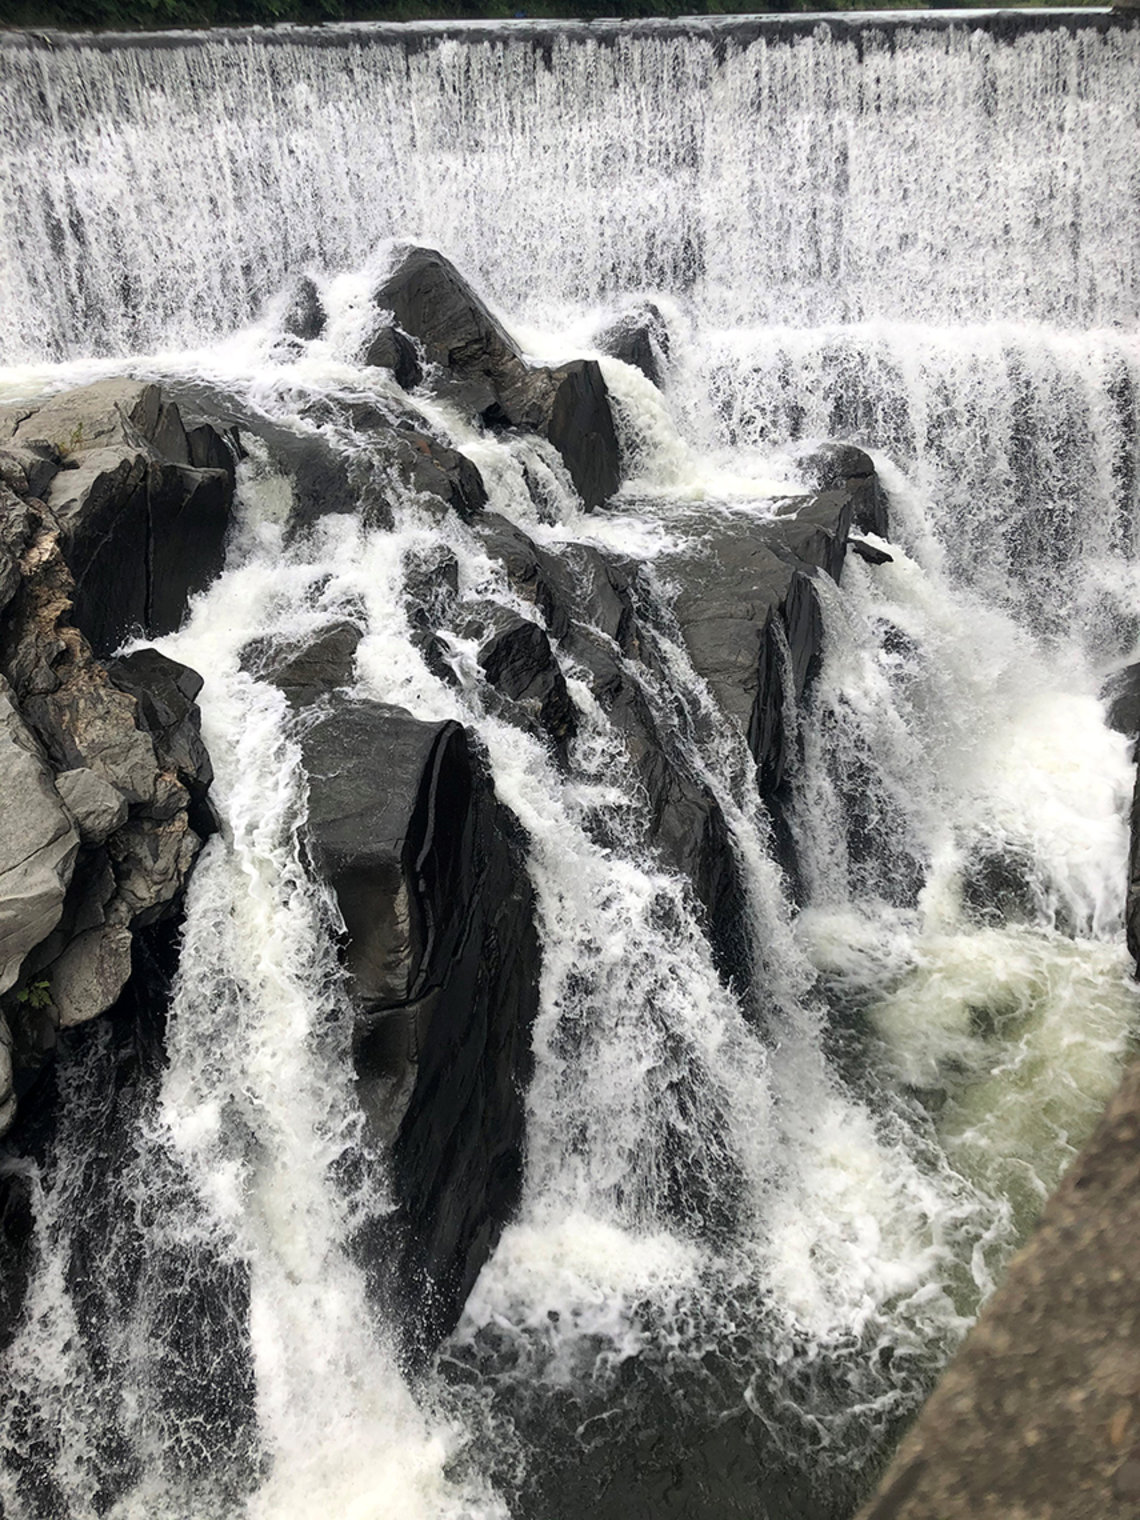 Waterfall over rocks